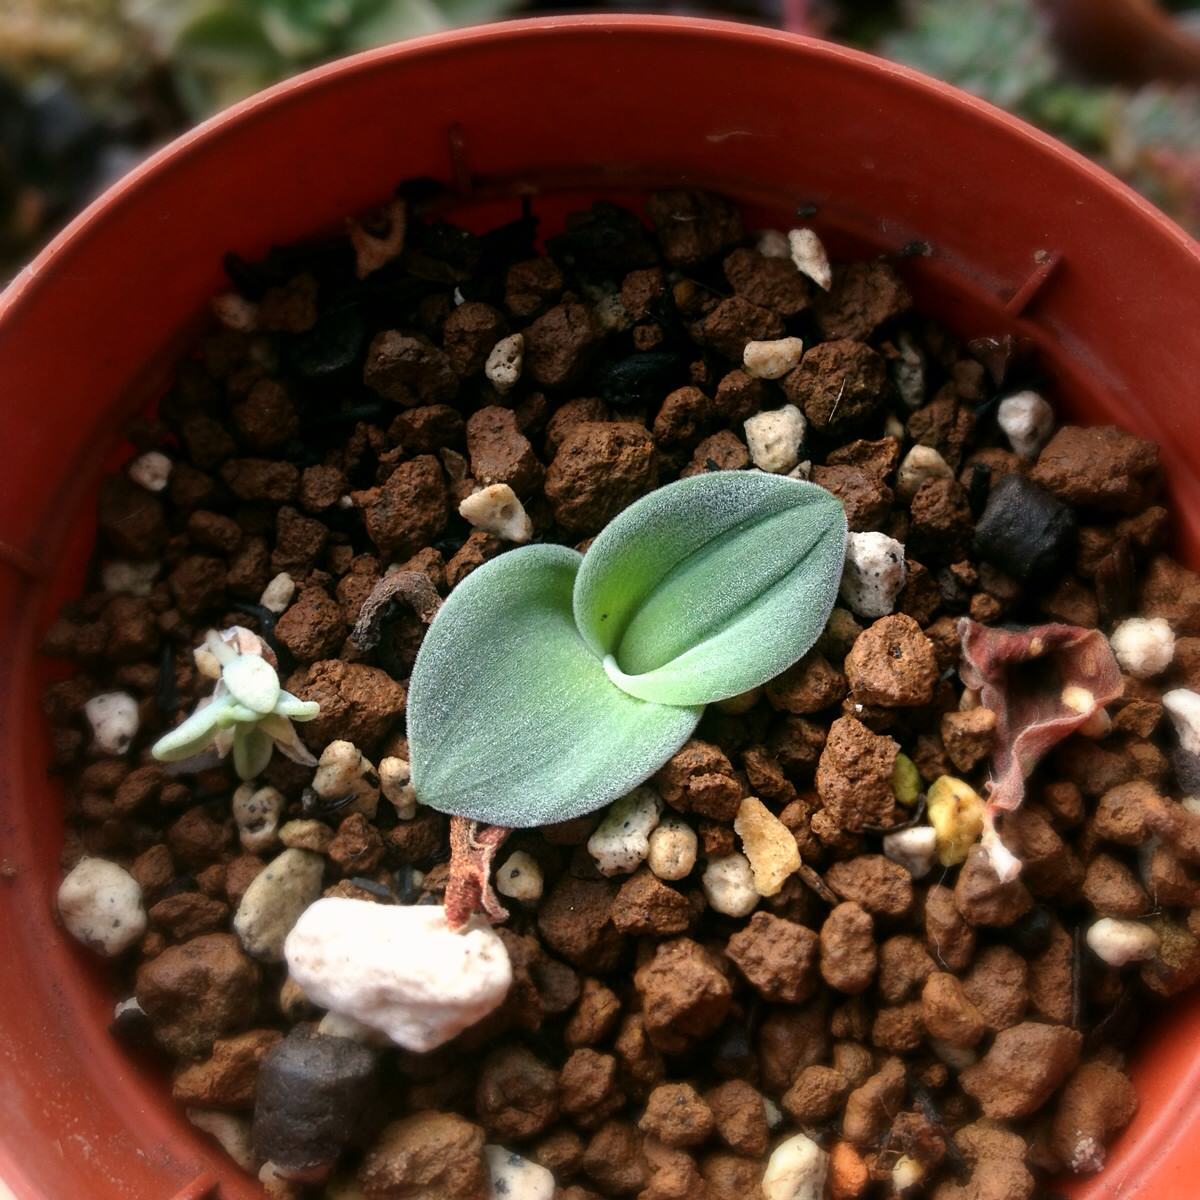 Drimia platyphylla